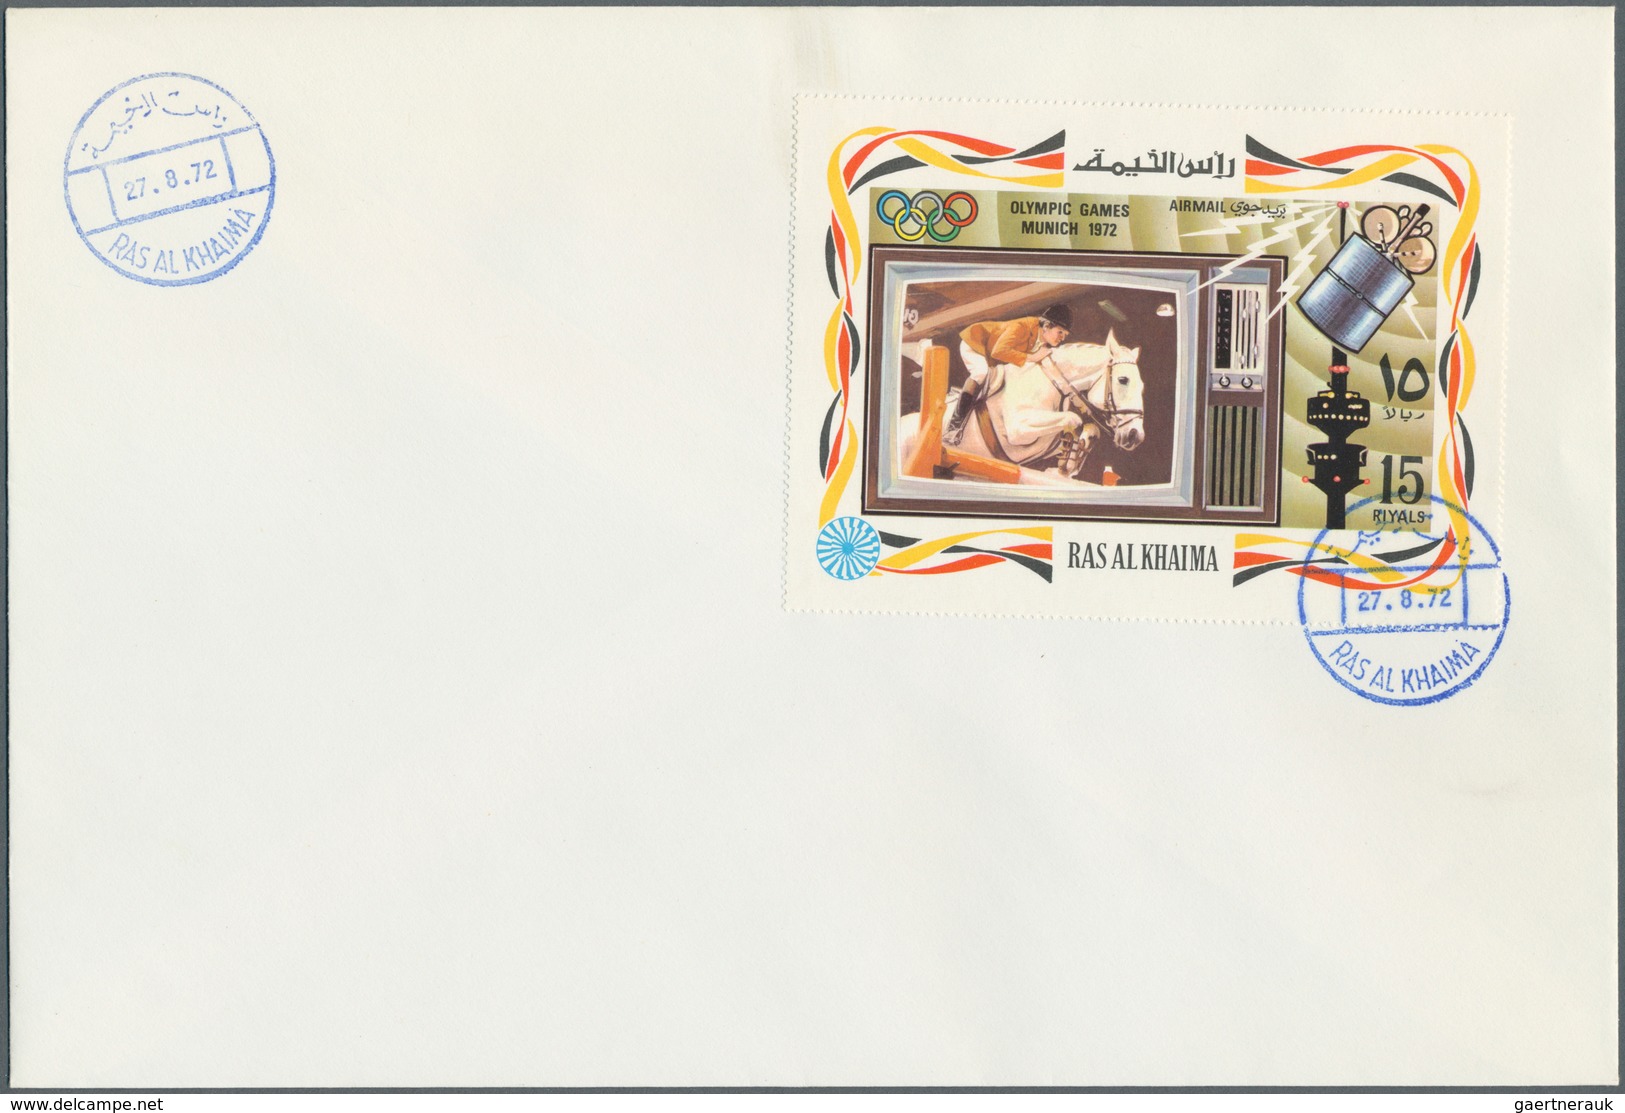 Ras al Khaima: 1969/1972, assortment incl. 23 covers (unaddressed envelopes resp. registered covers)